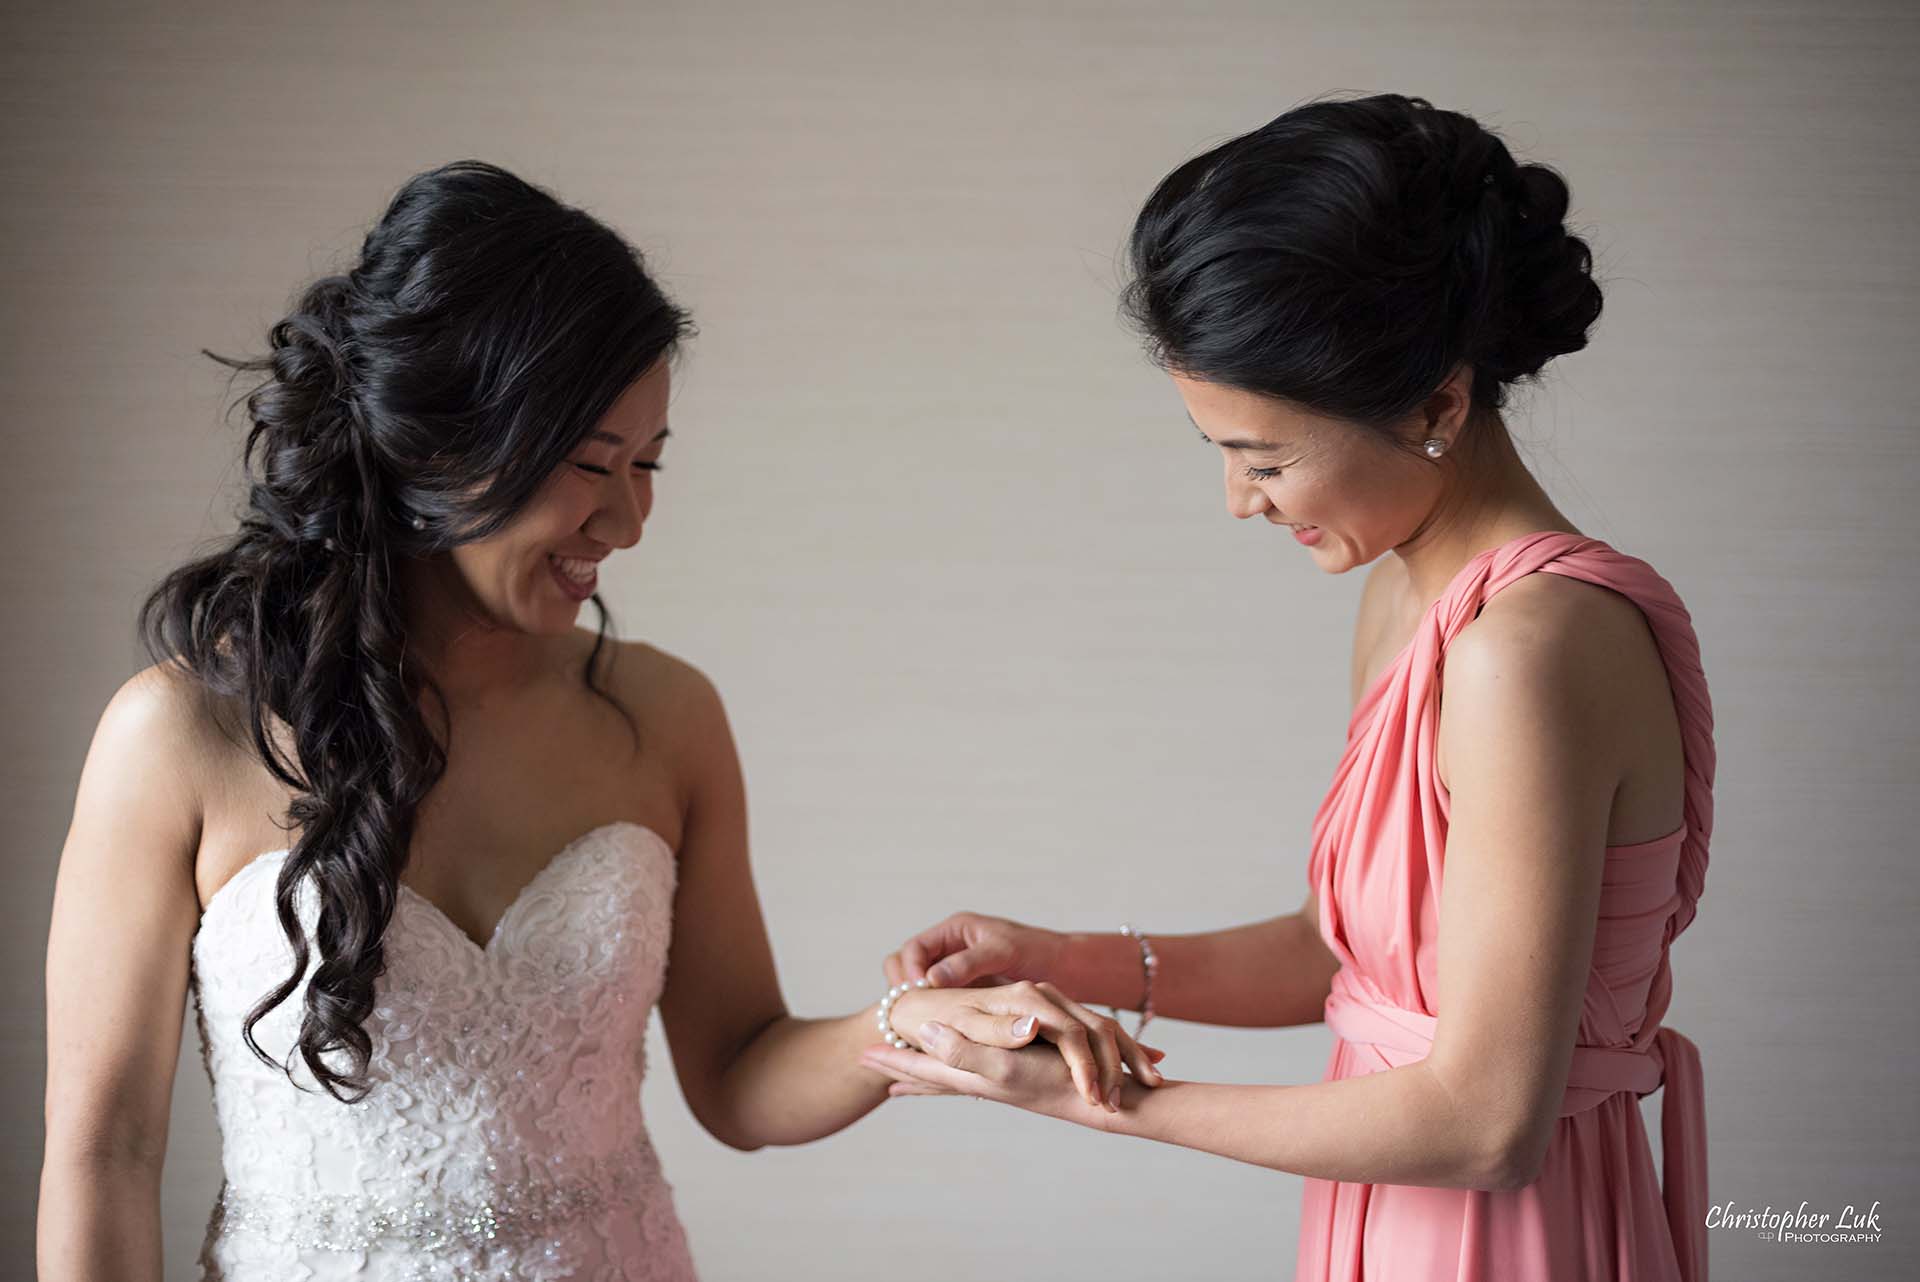 Christopher Luk Toronto Wedding Photographer Hotel Bride Getting Ready Details Candid Natural Photojournalistic Bridesmaid Bracelet